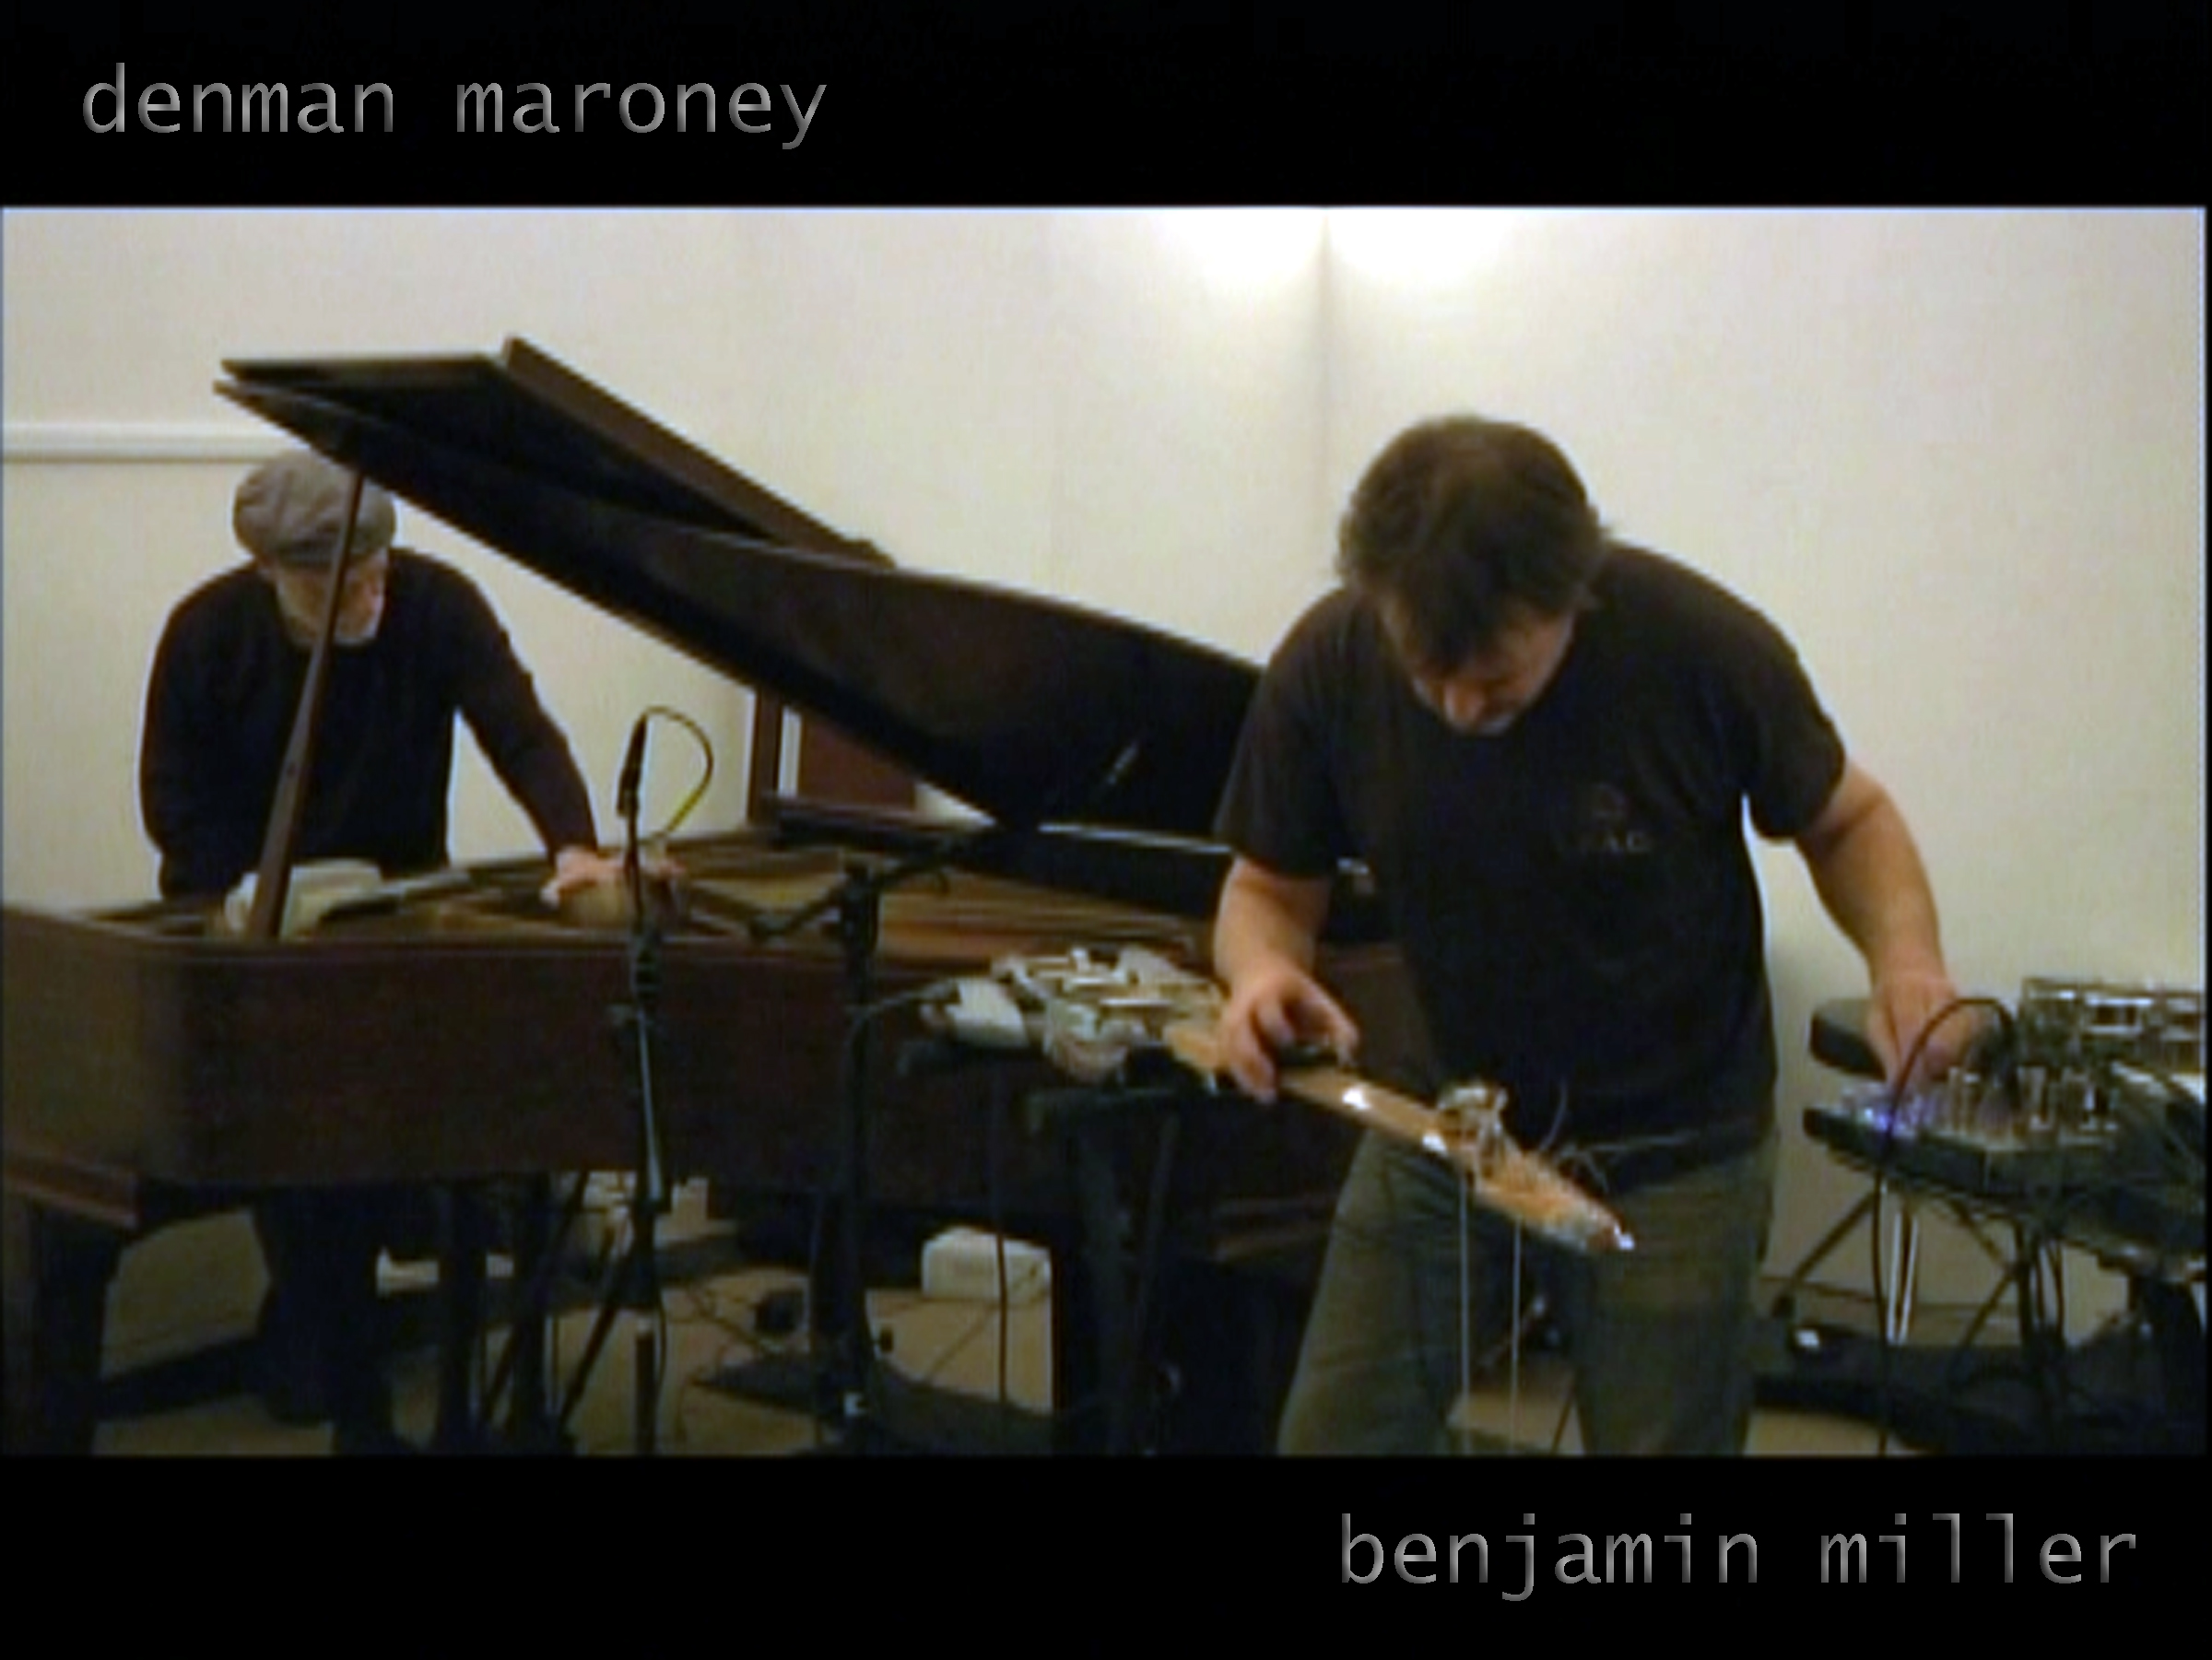 Denman (piano) and Ben (electronics) @DSMC